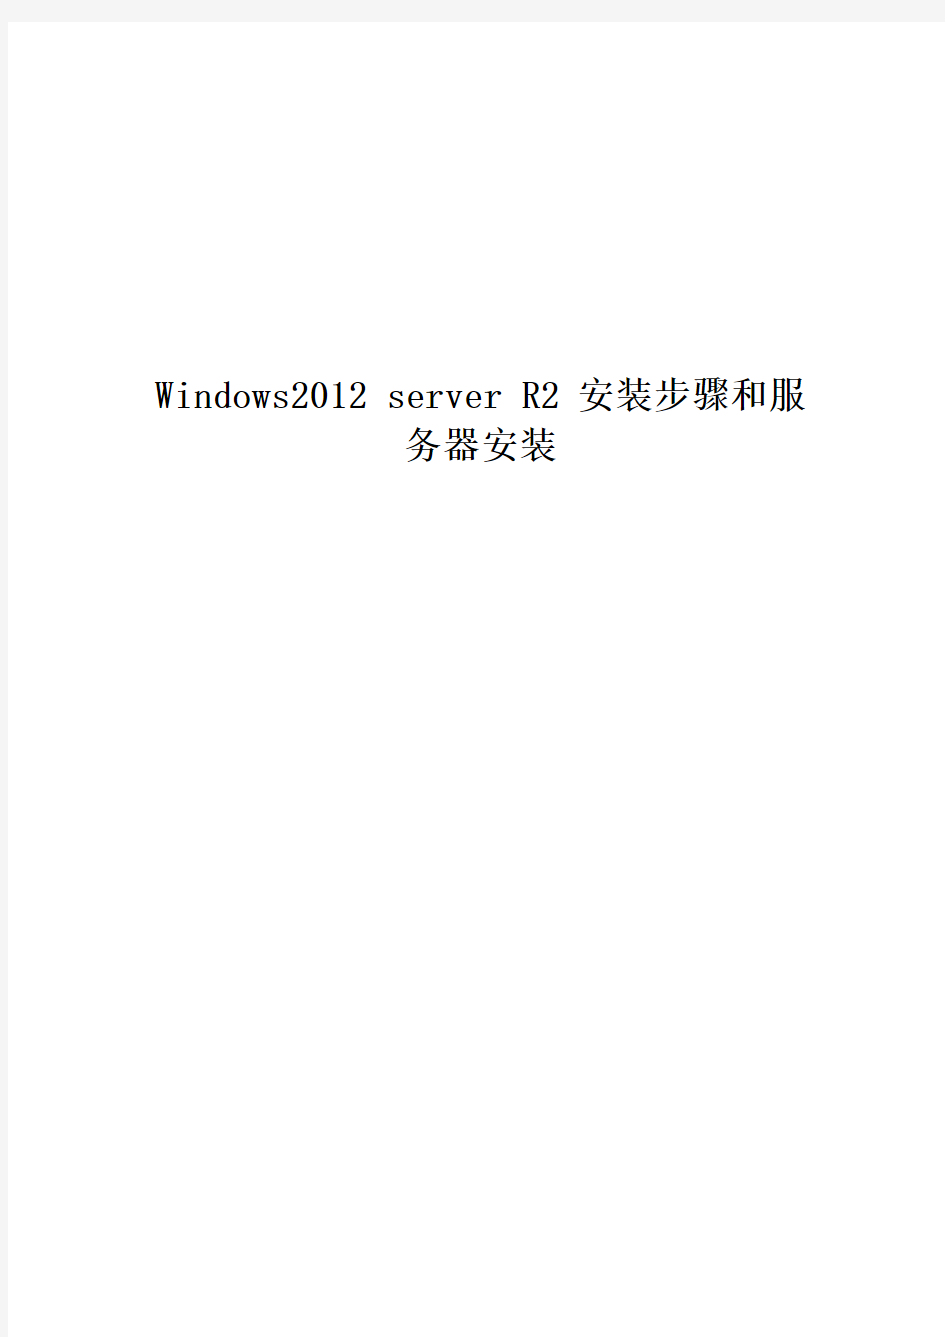 Windows2012-server-R2-安装步骤和服务器安装